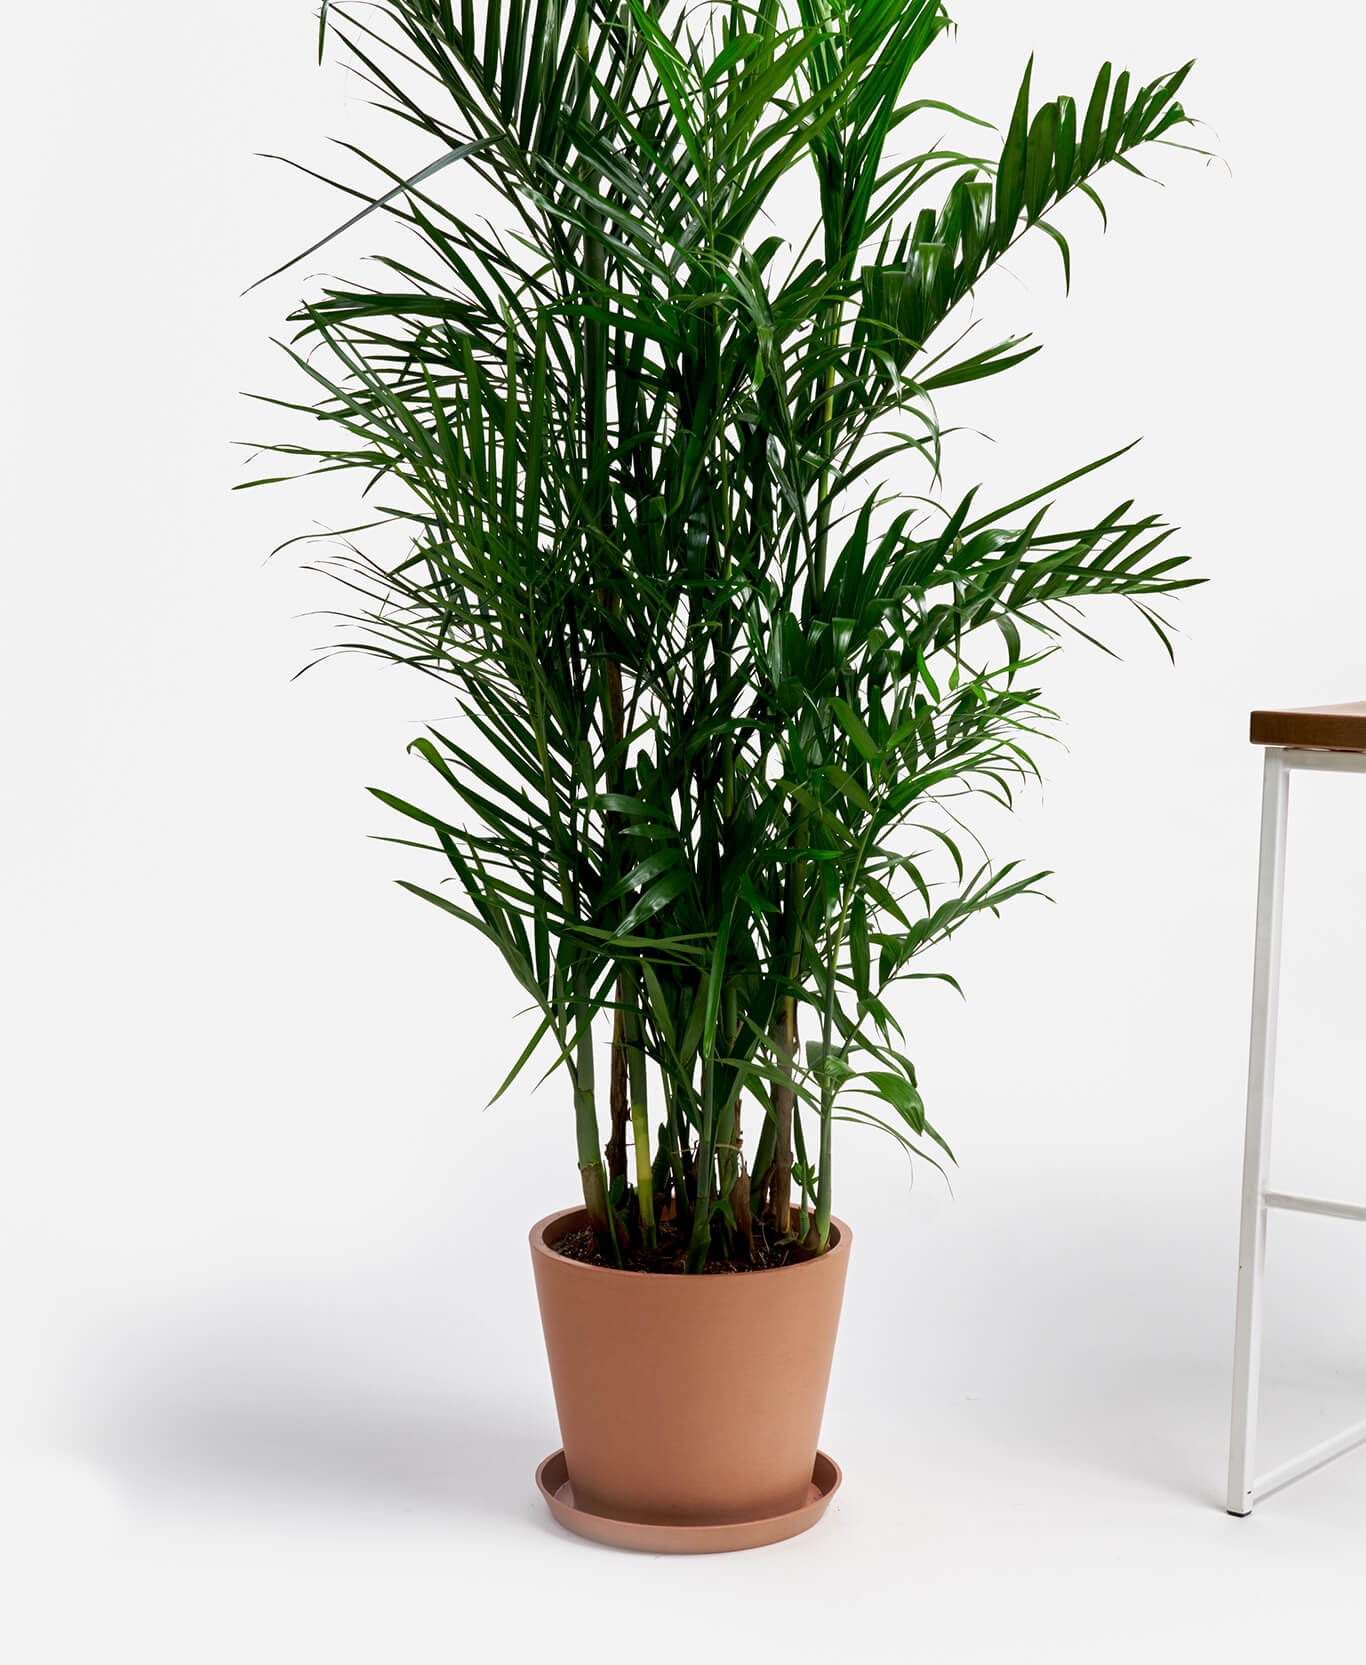 Bamboo Palm - Image 0